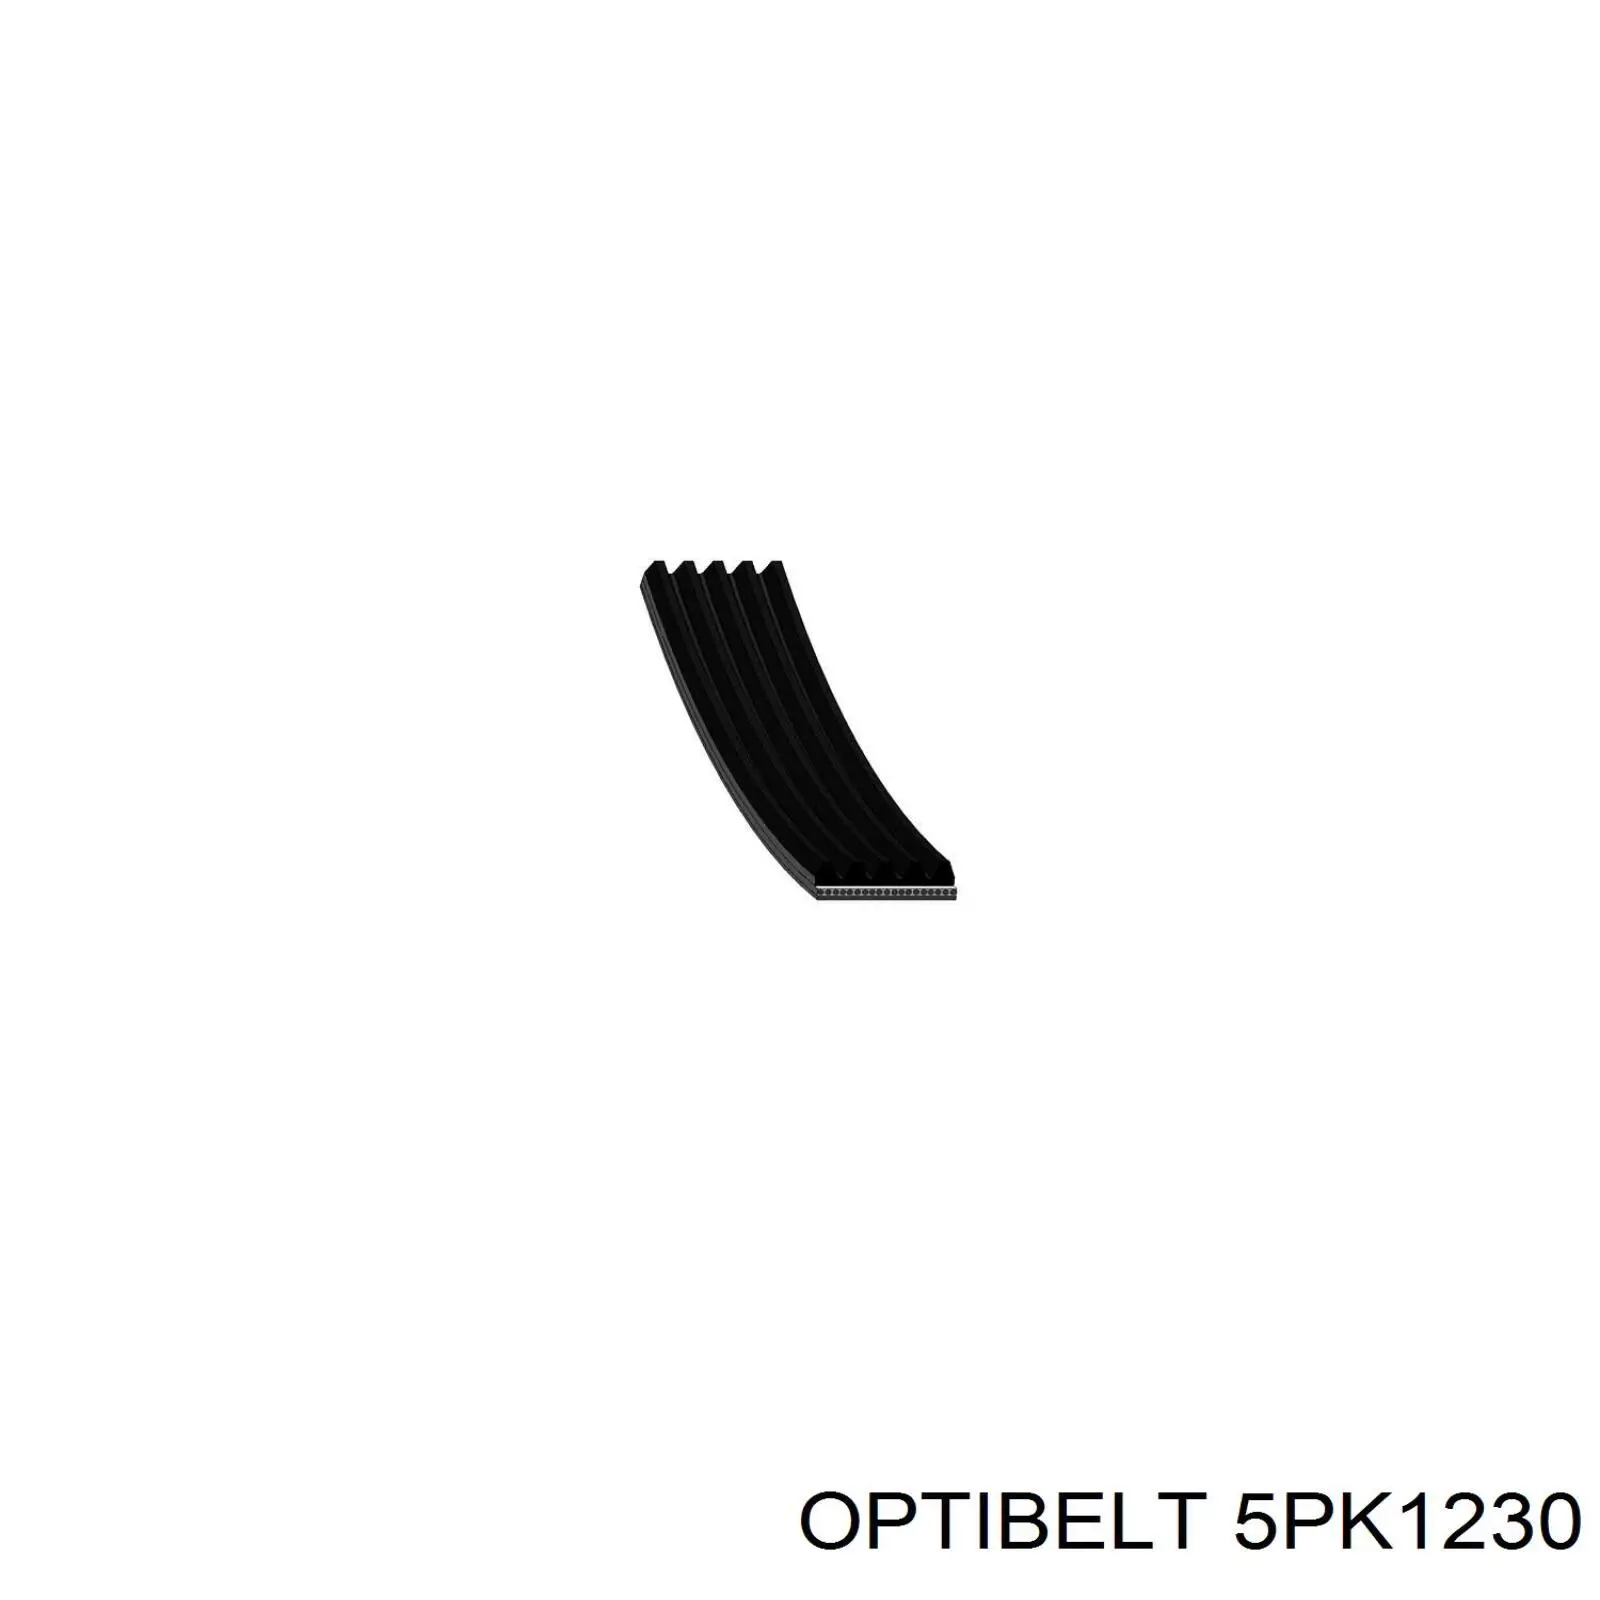 5PK1230 Optibelt correa trapezoidal